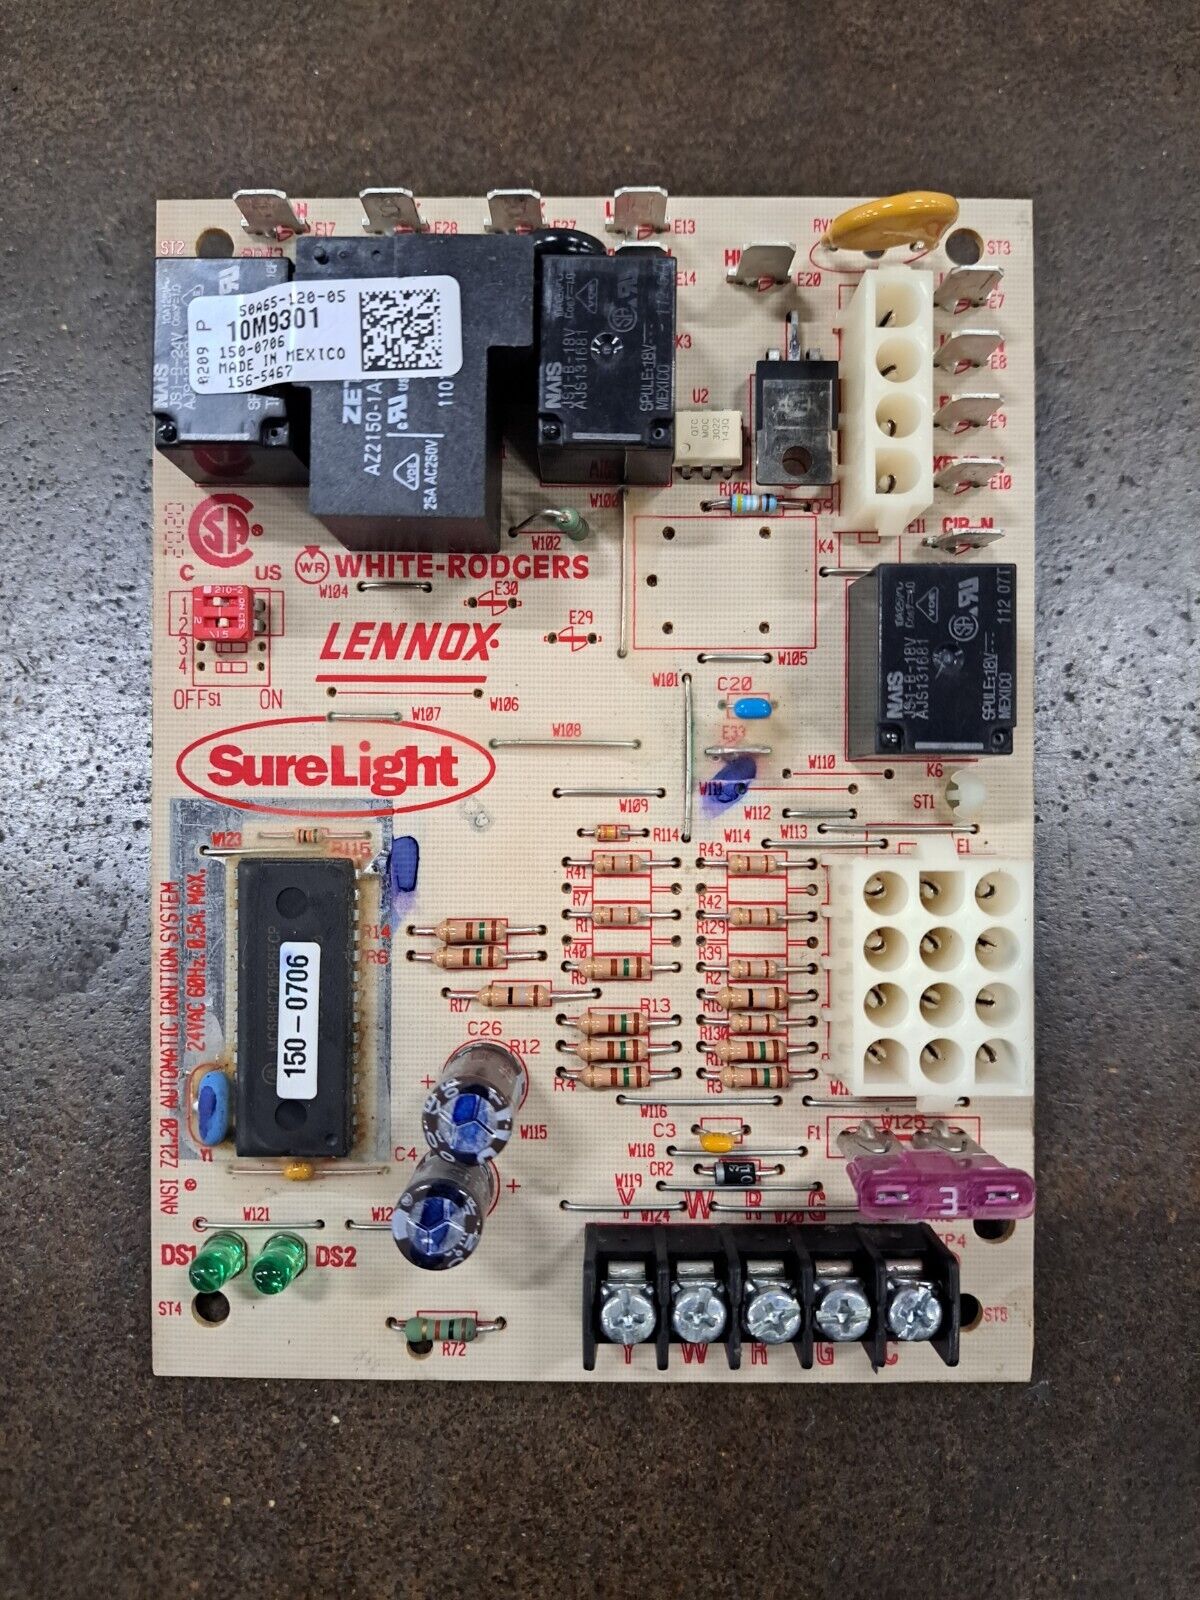 LENNOX 10M9301 SureLight 50A65-120-05 Furnace Control Circuit Board